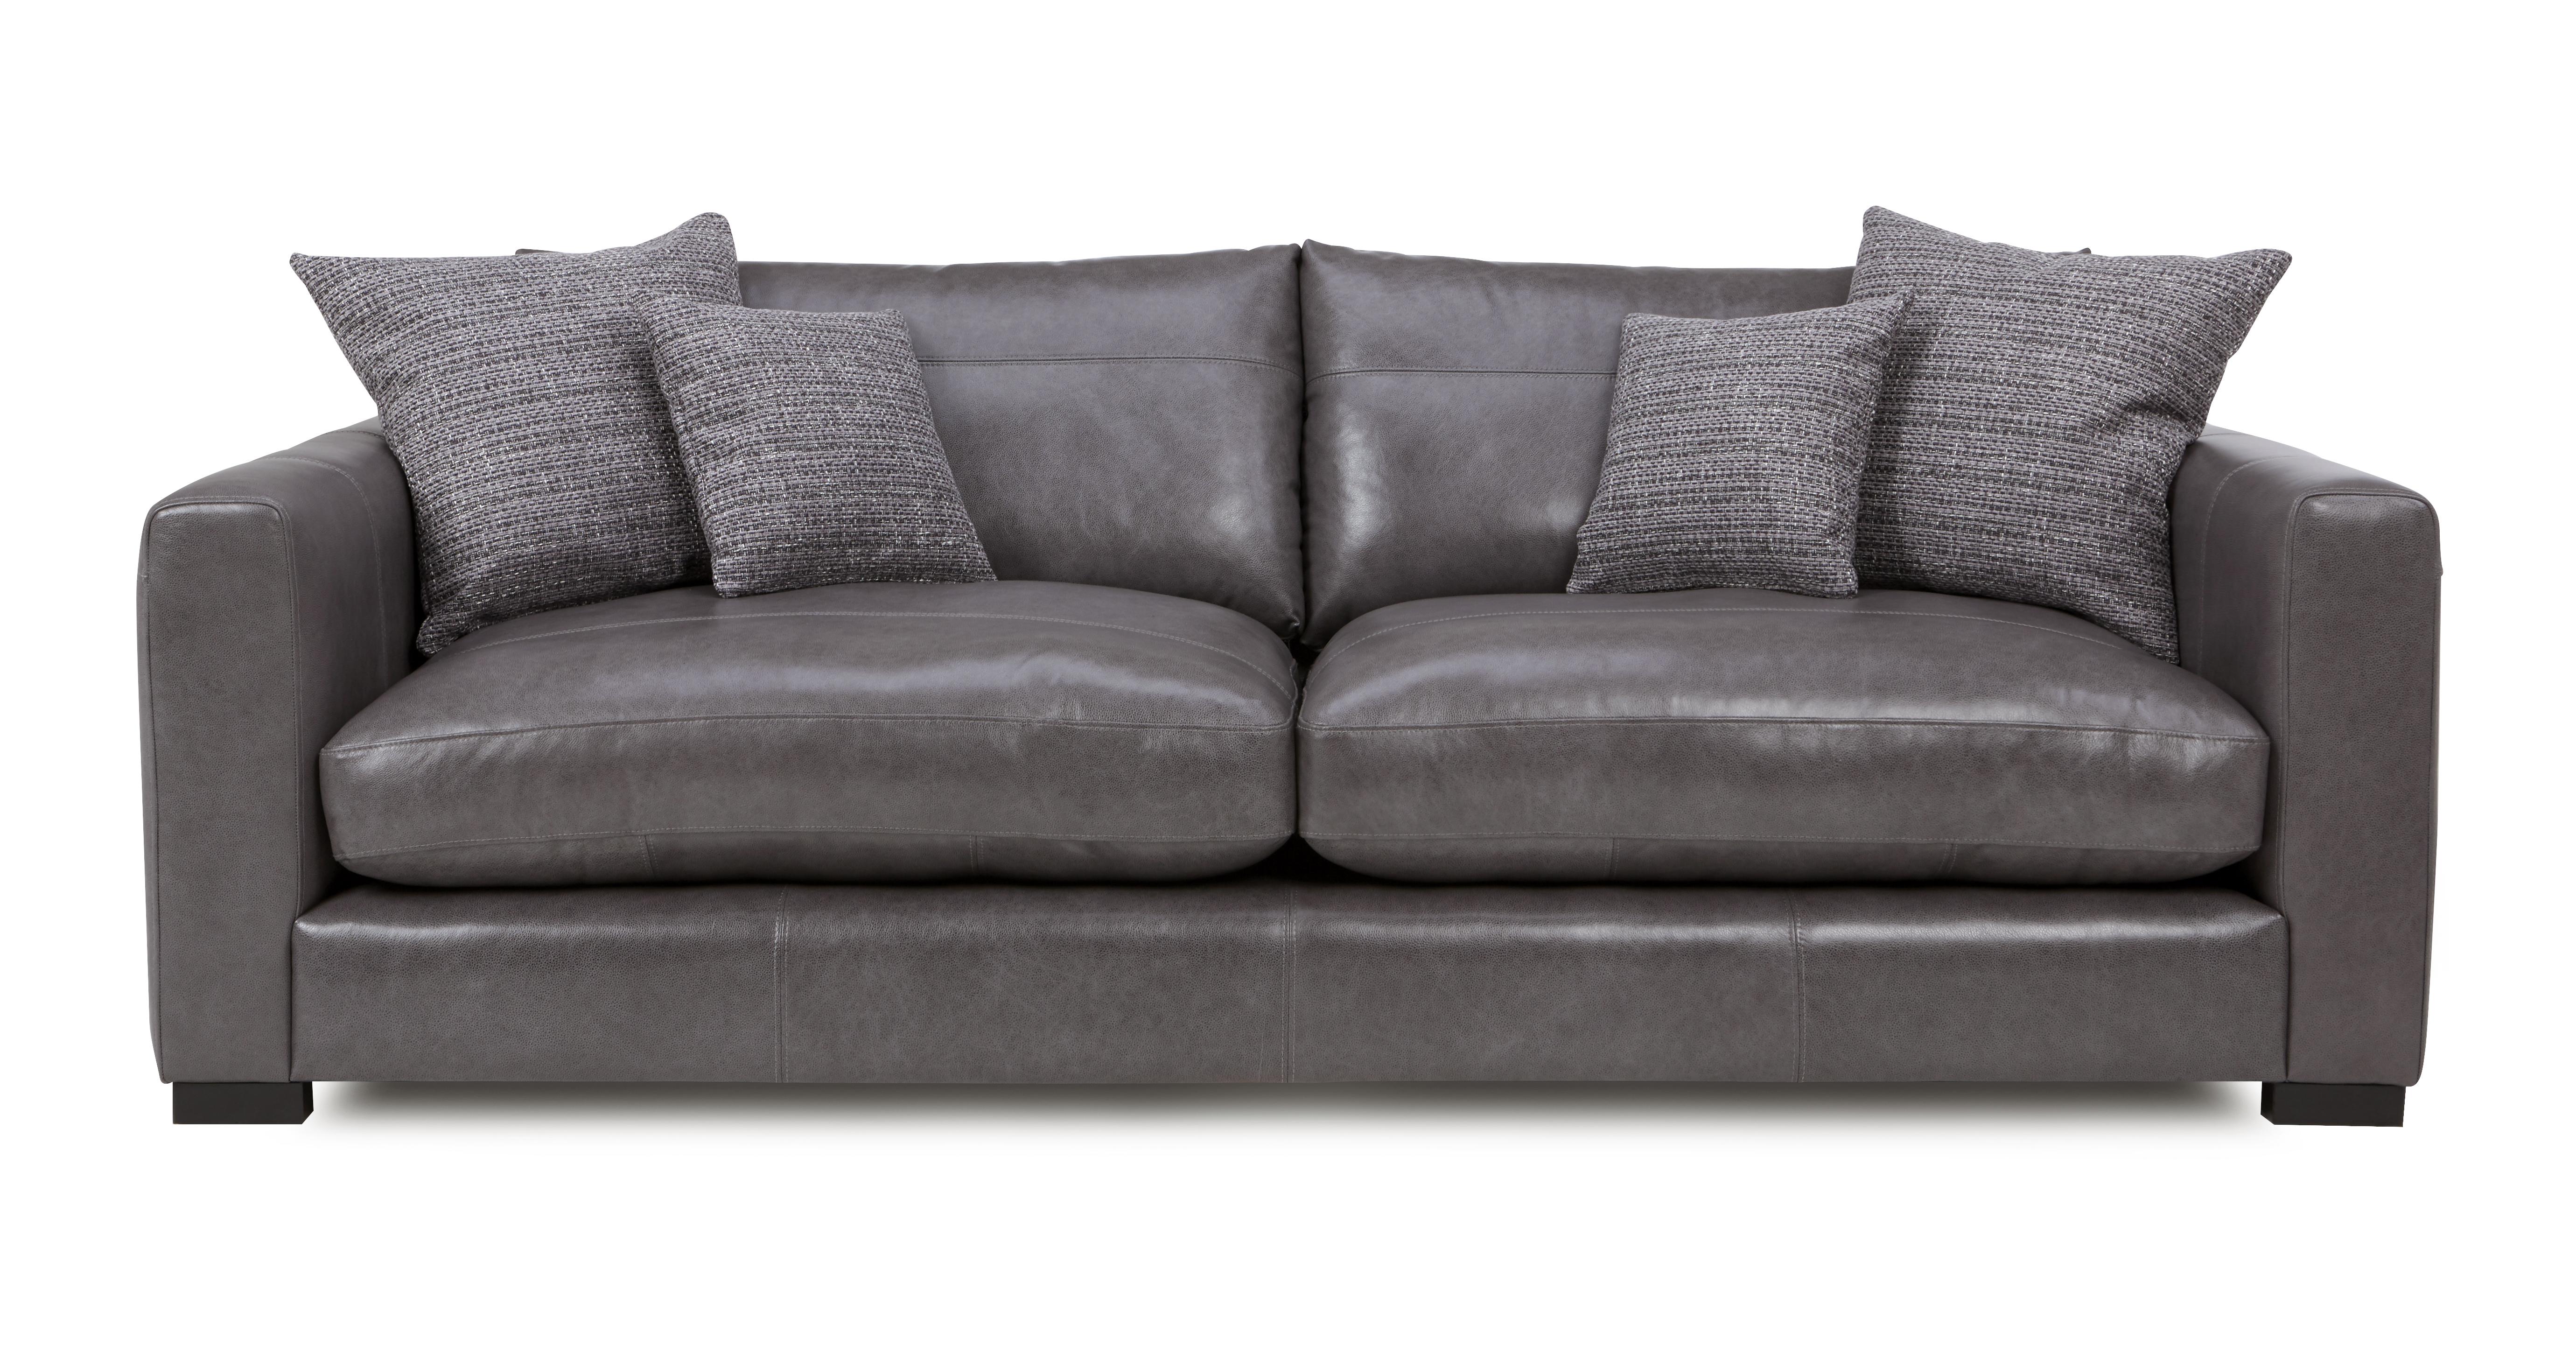 dillon leather sofa dfs